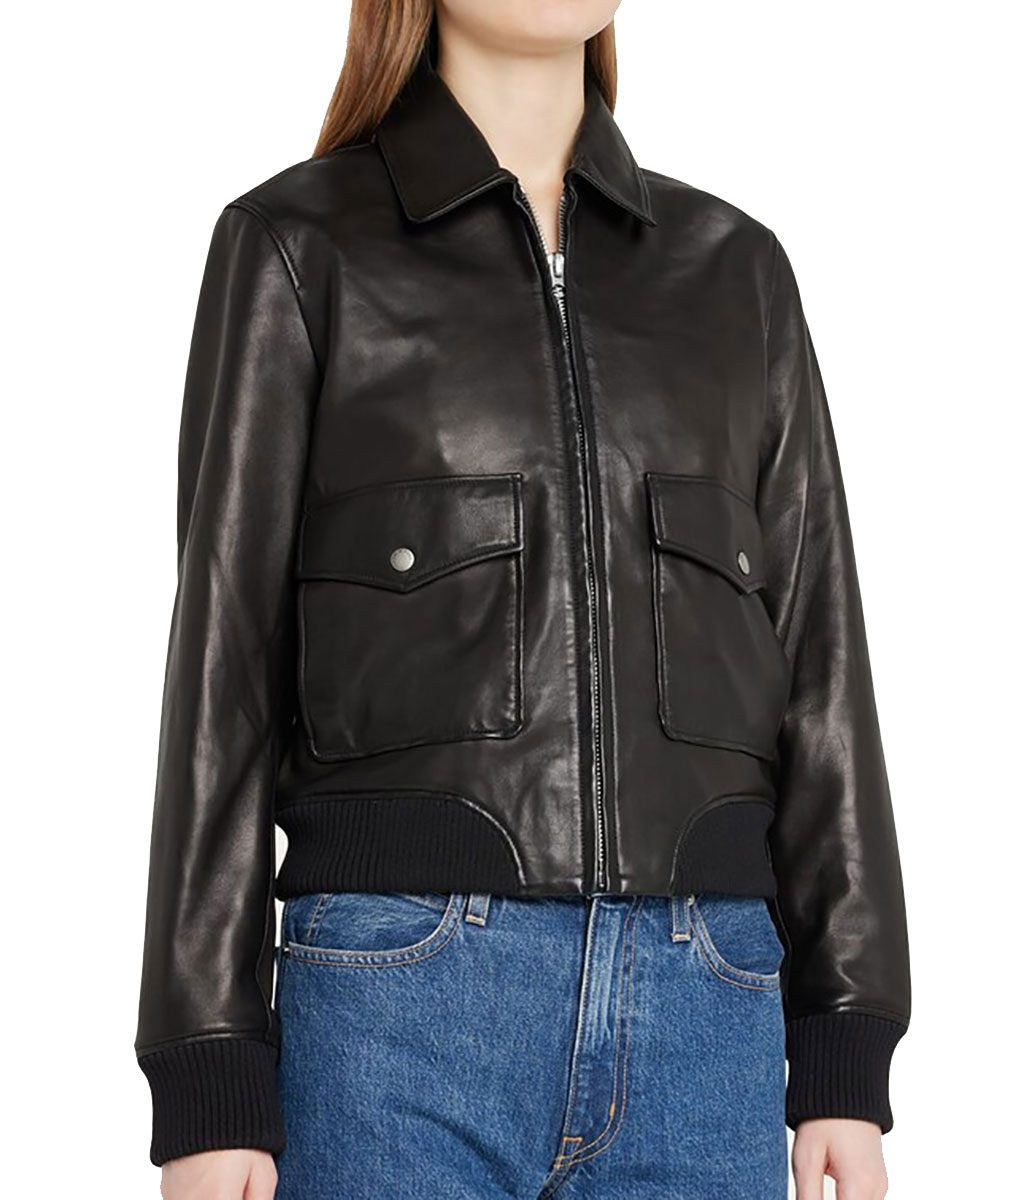 Jennifer-Connelly-Dark-Matter-Leather-Jacket-3